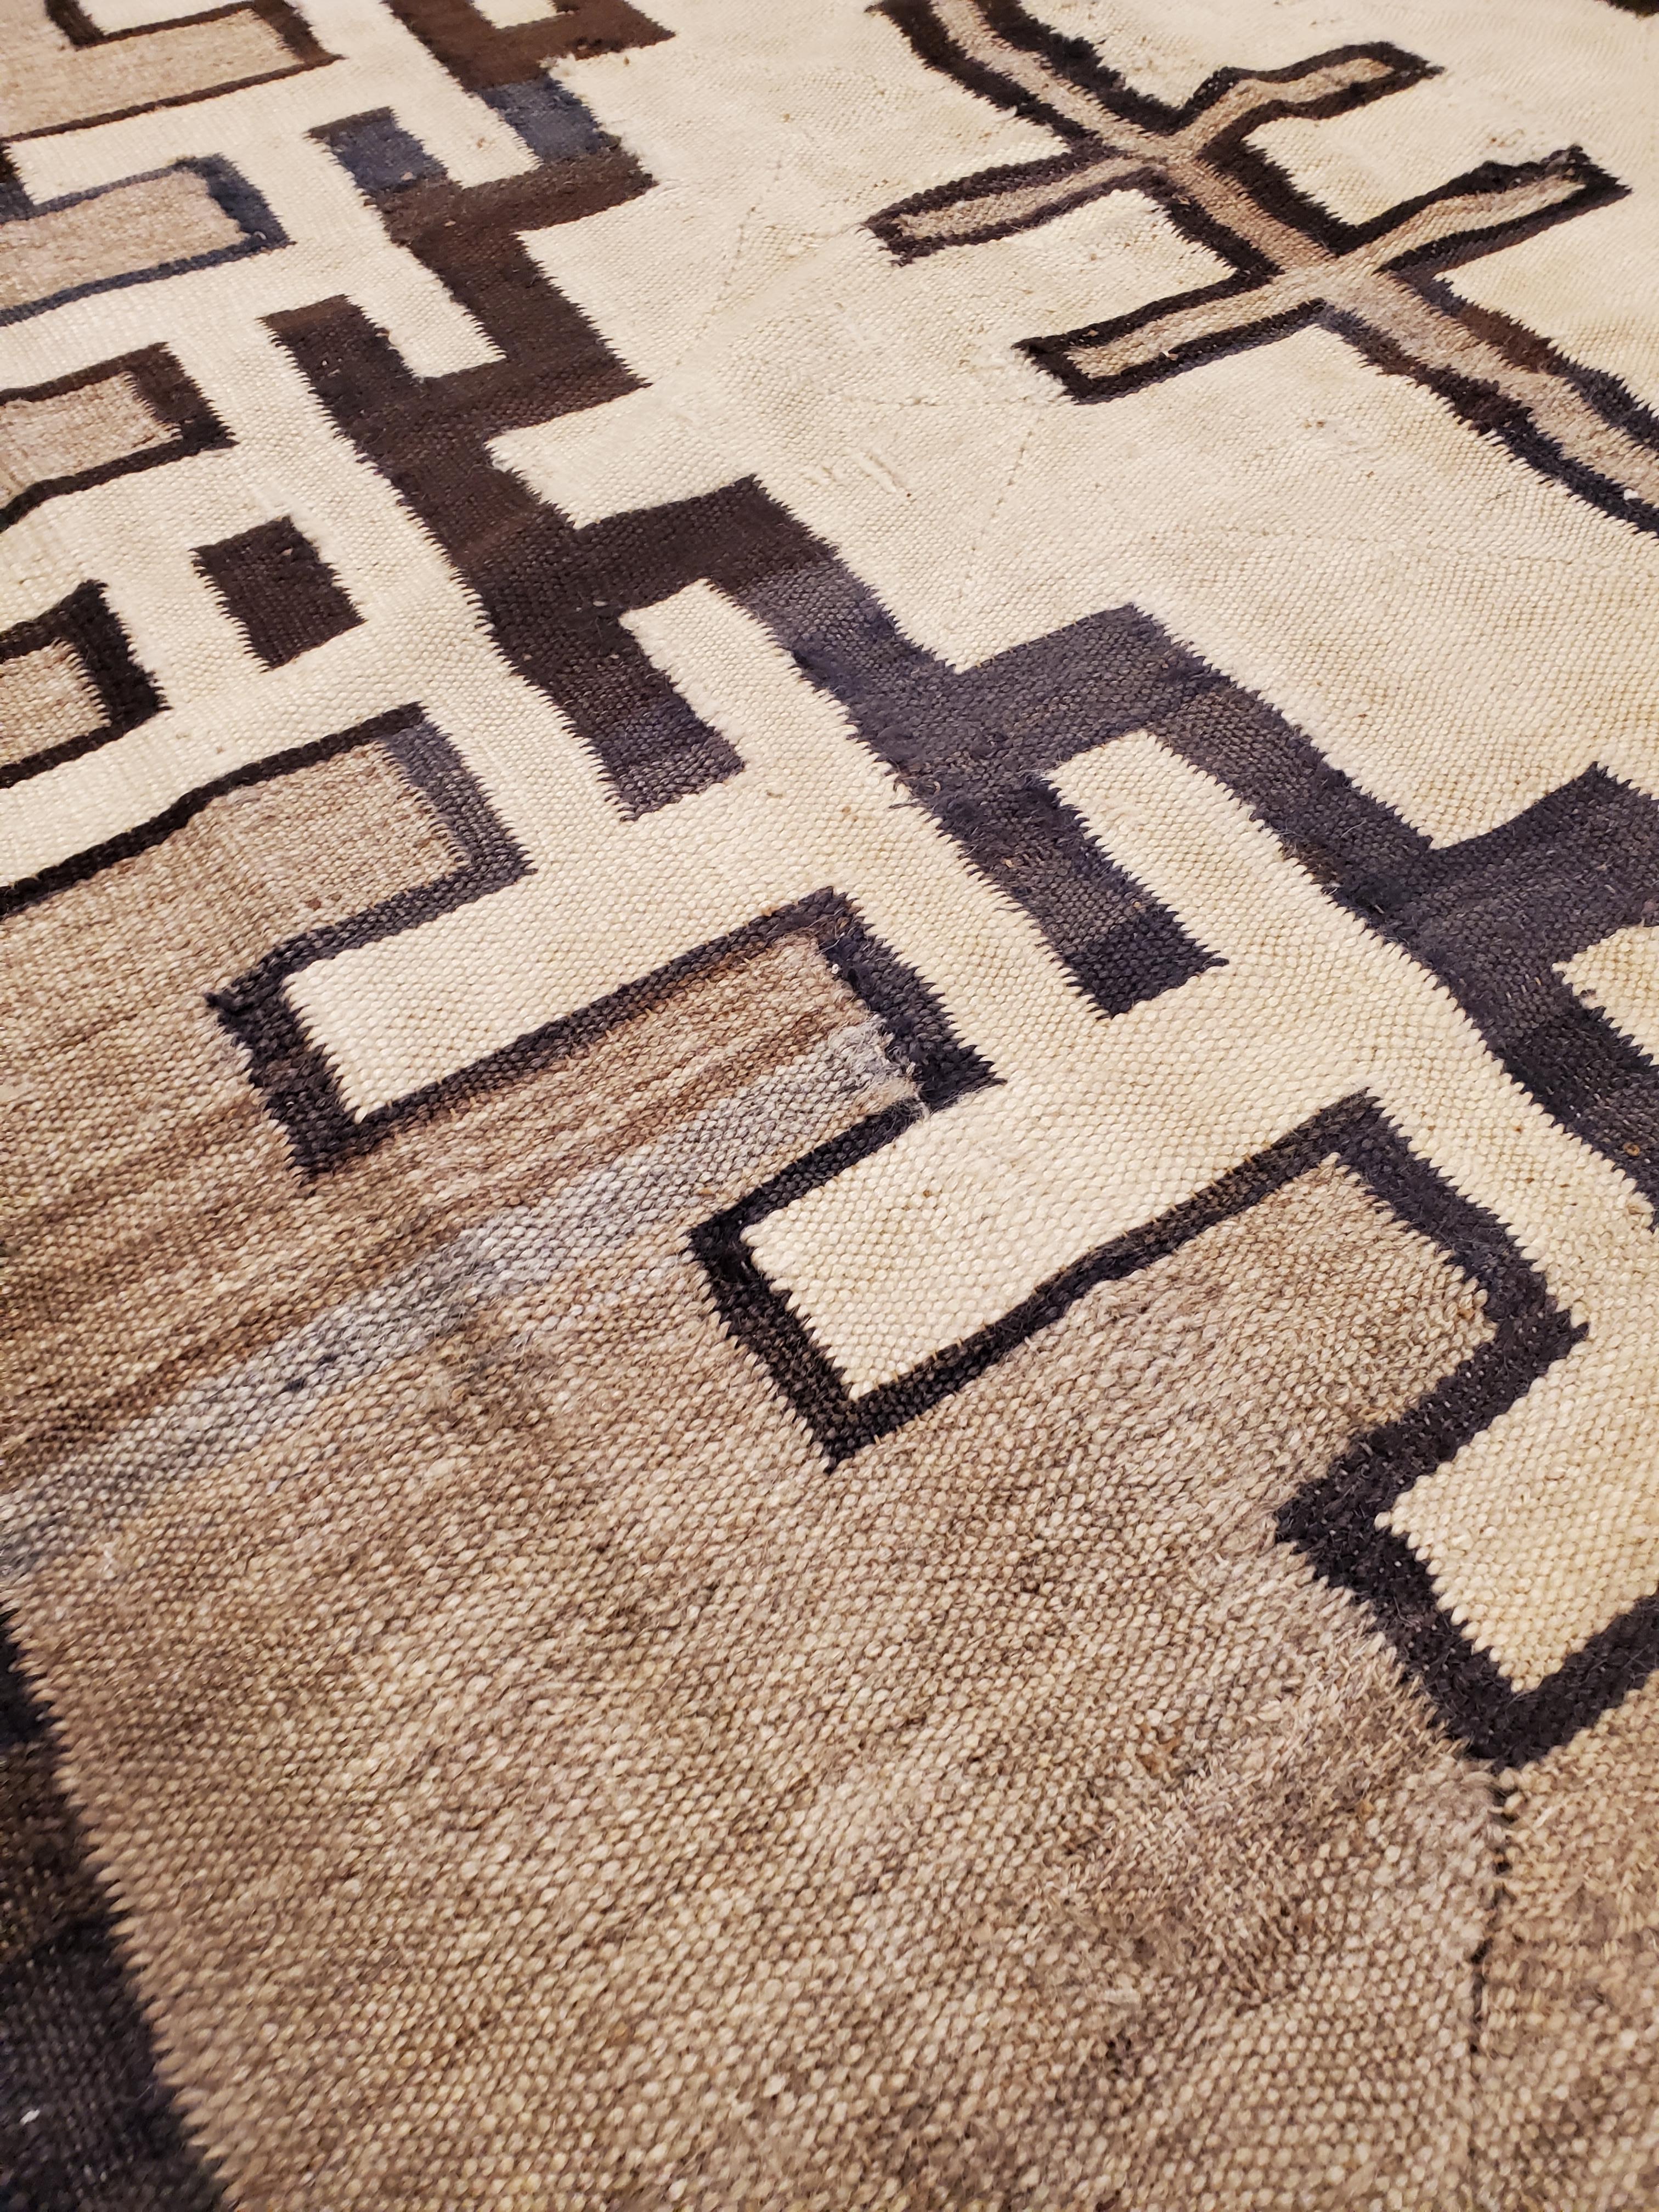 American Antique Navajo Carpet, Handmade Wool, Neutral colors, Ivory, Beige, Gray & Brown For Sale